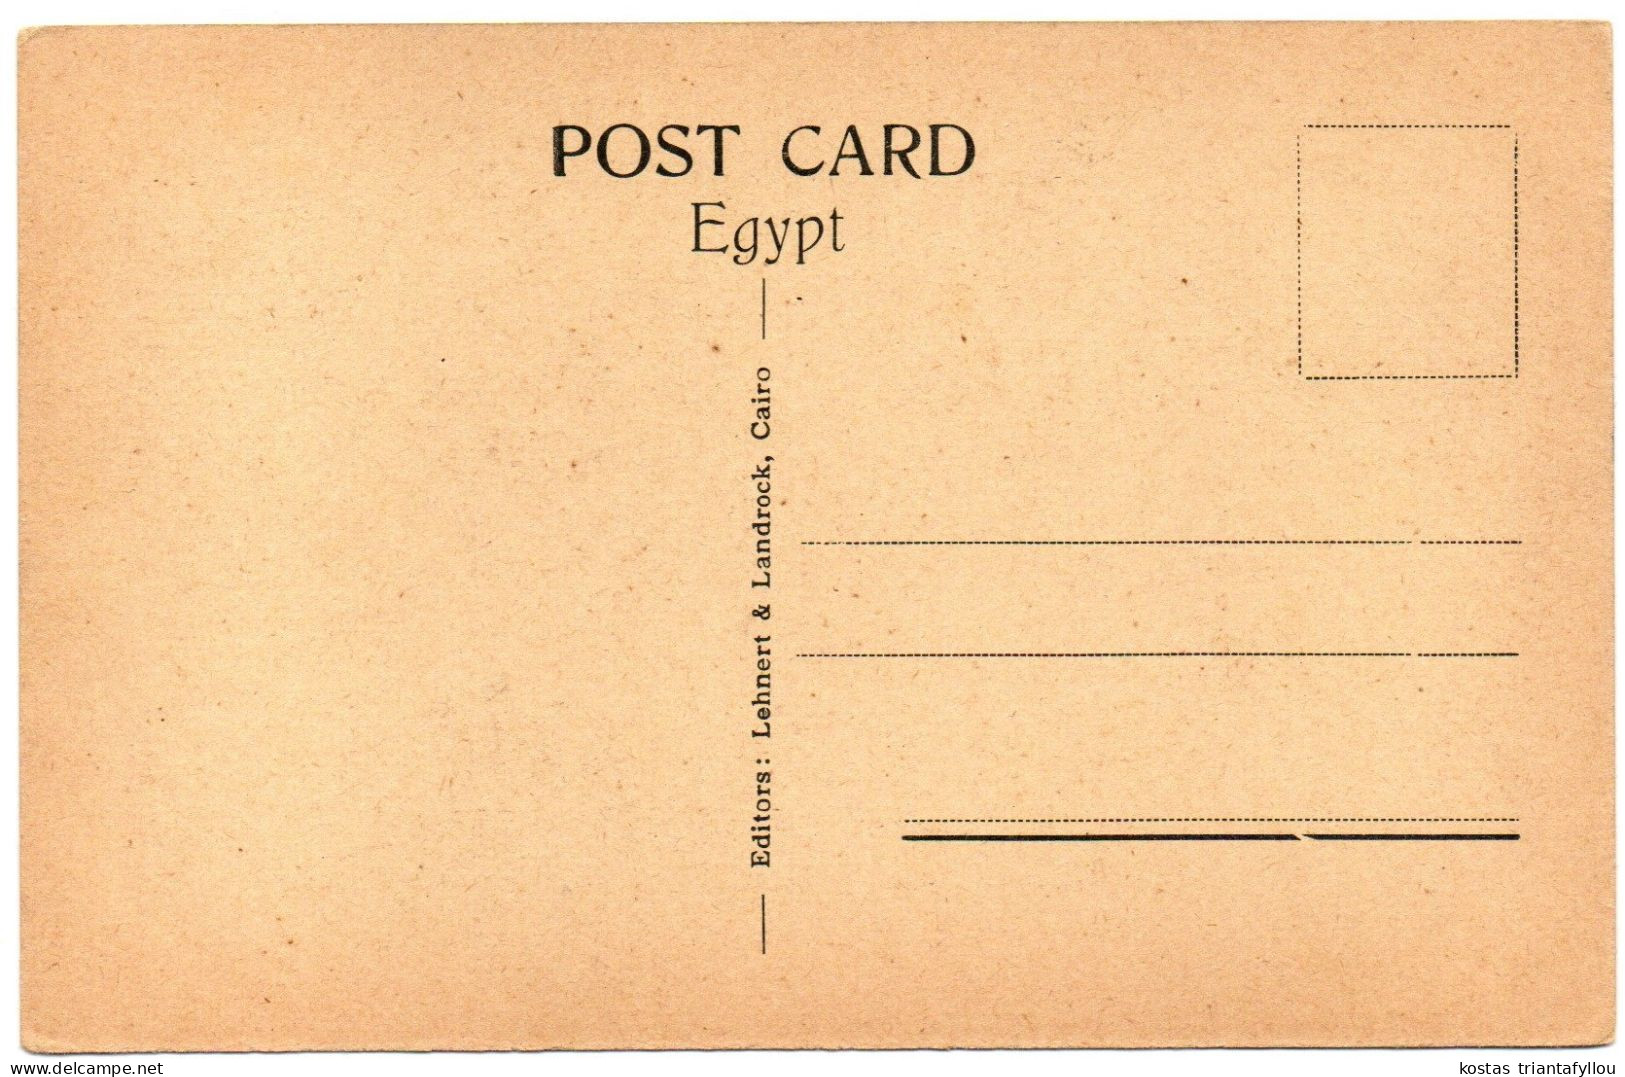 4.1.2 EGYPT, CAIRO, SOLIMAN PACHA SQUARE, POSTCARD - Cairo